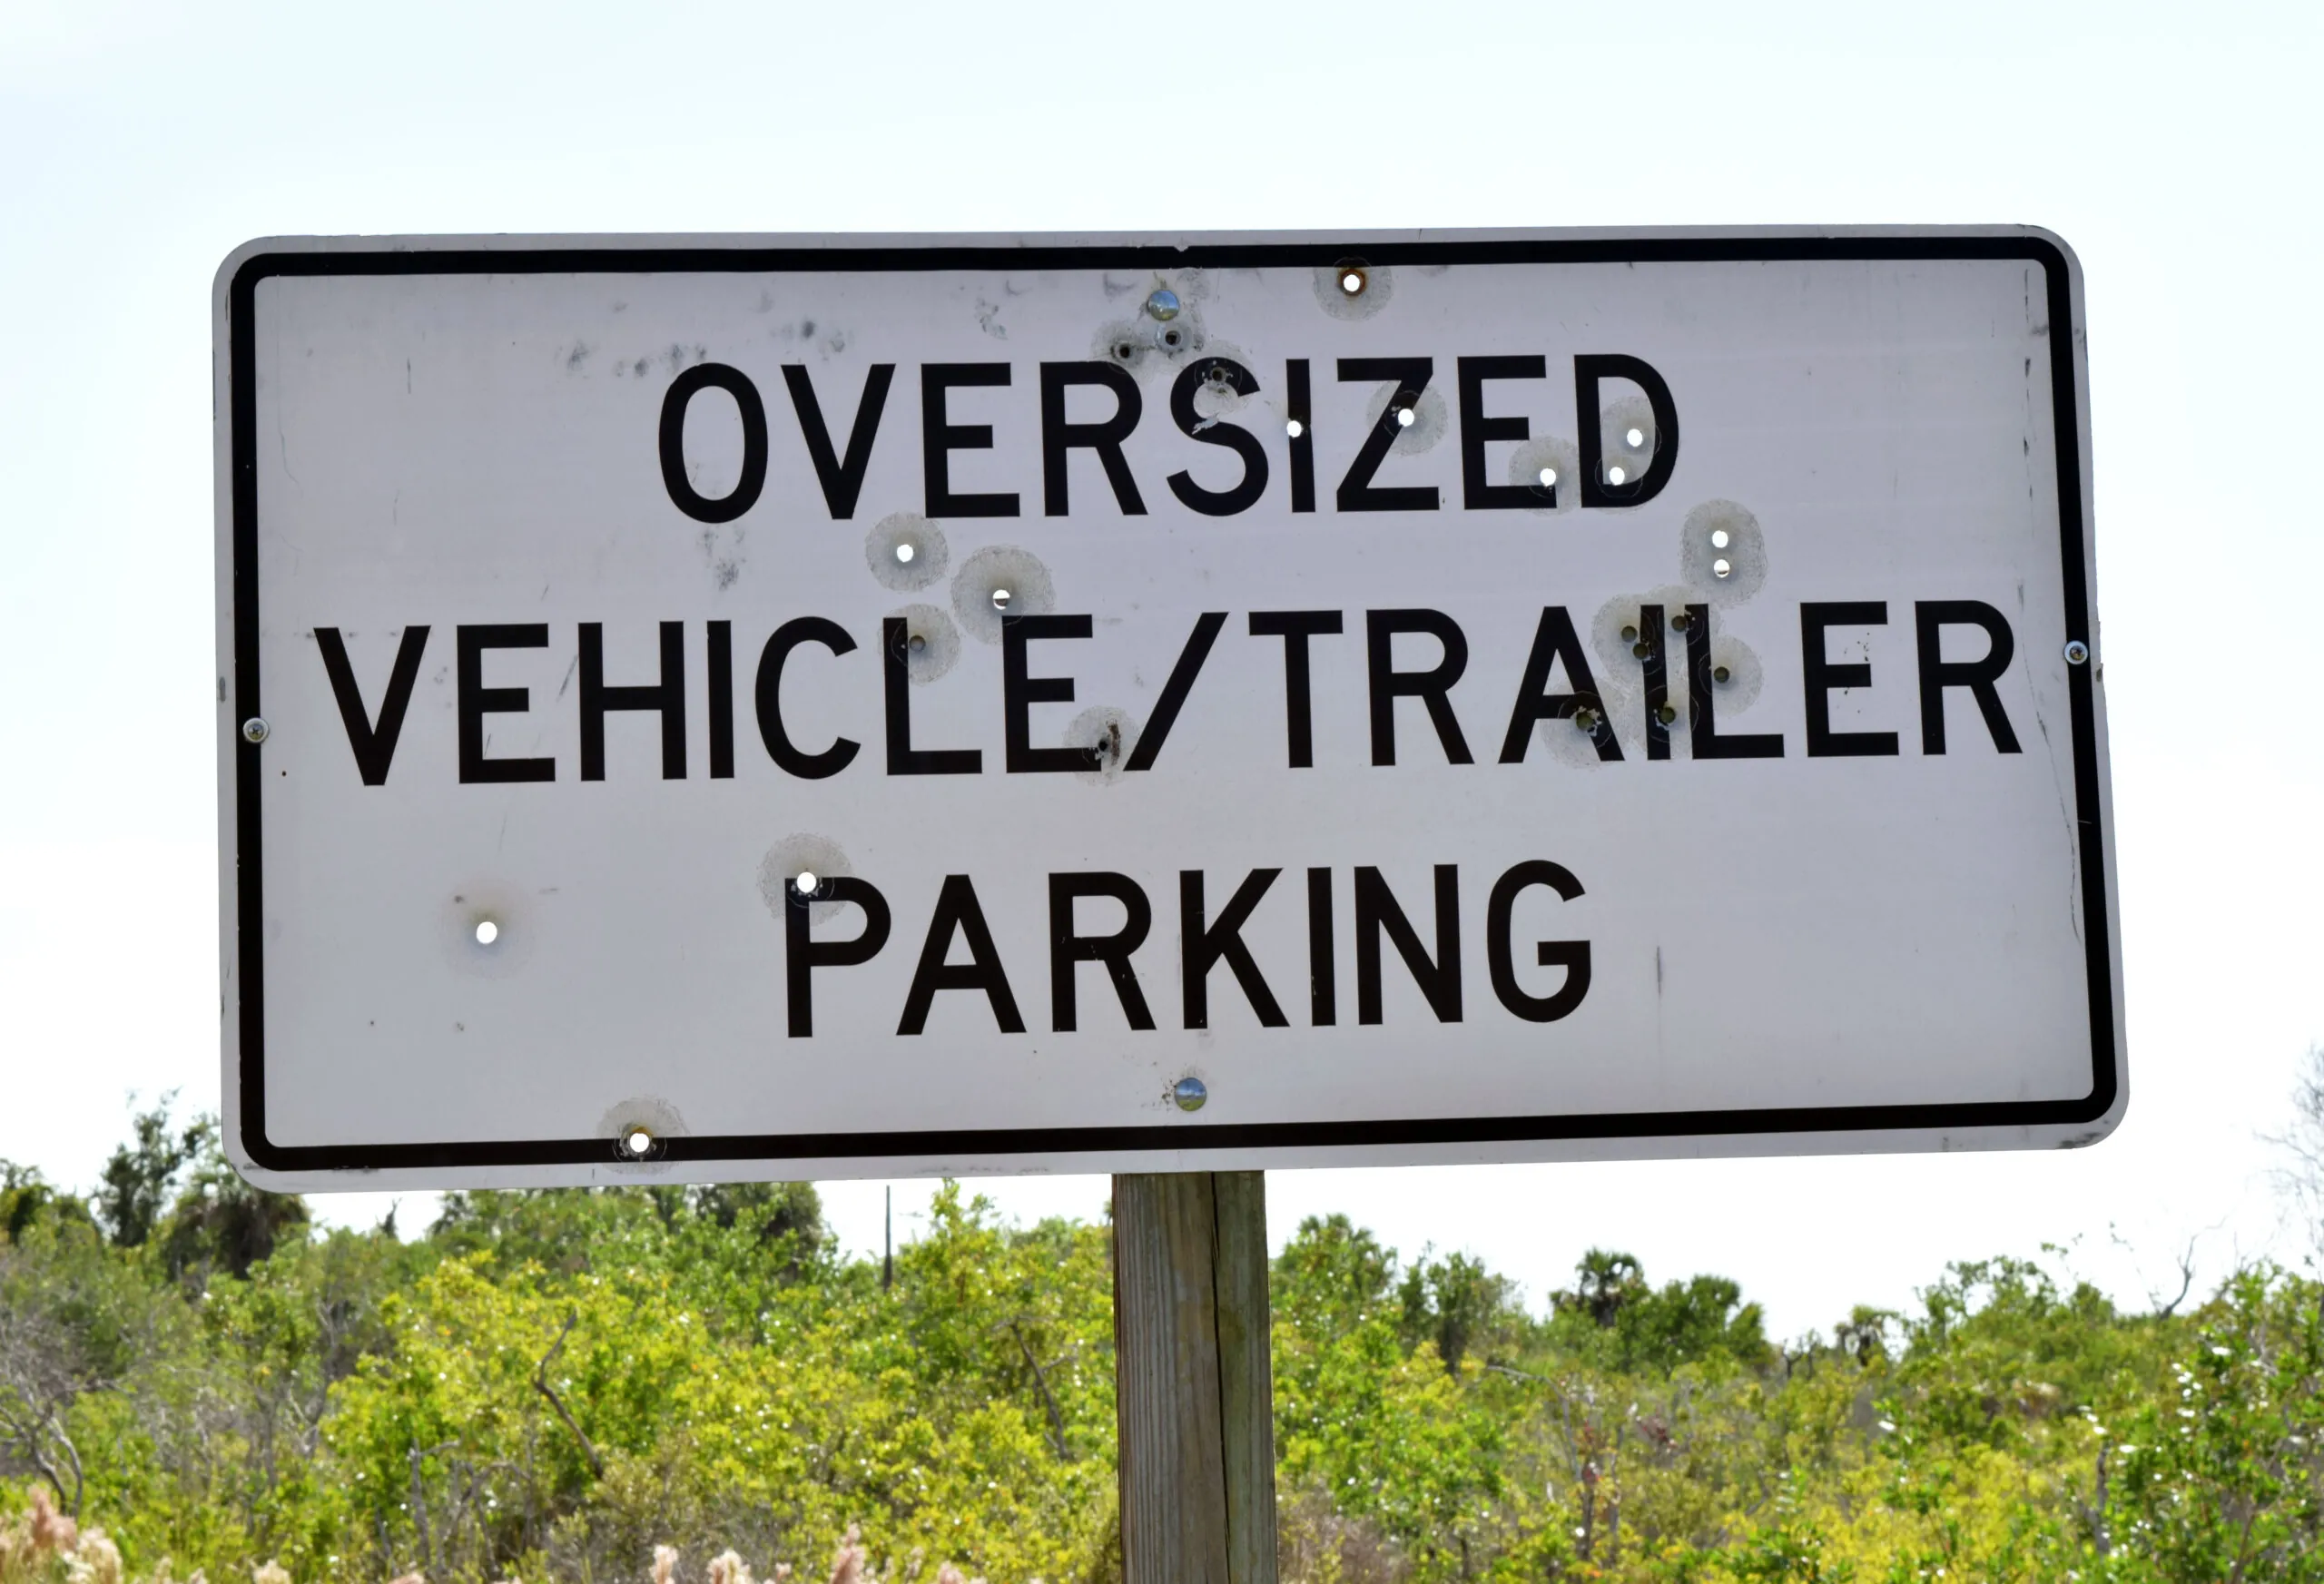 Oversized vehicle trailer parking sign